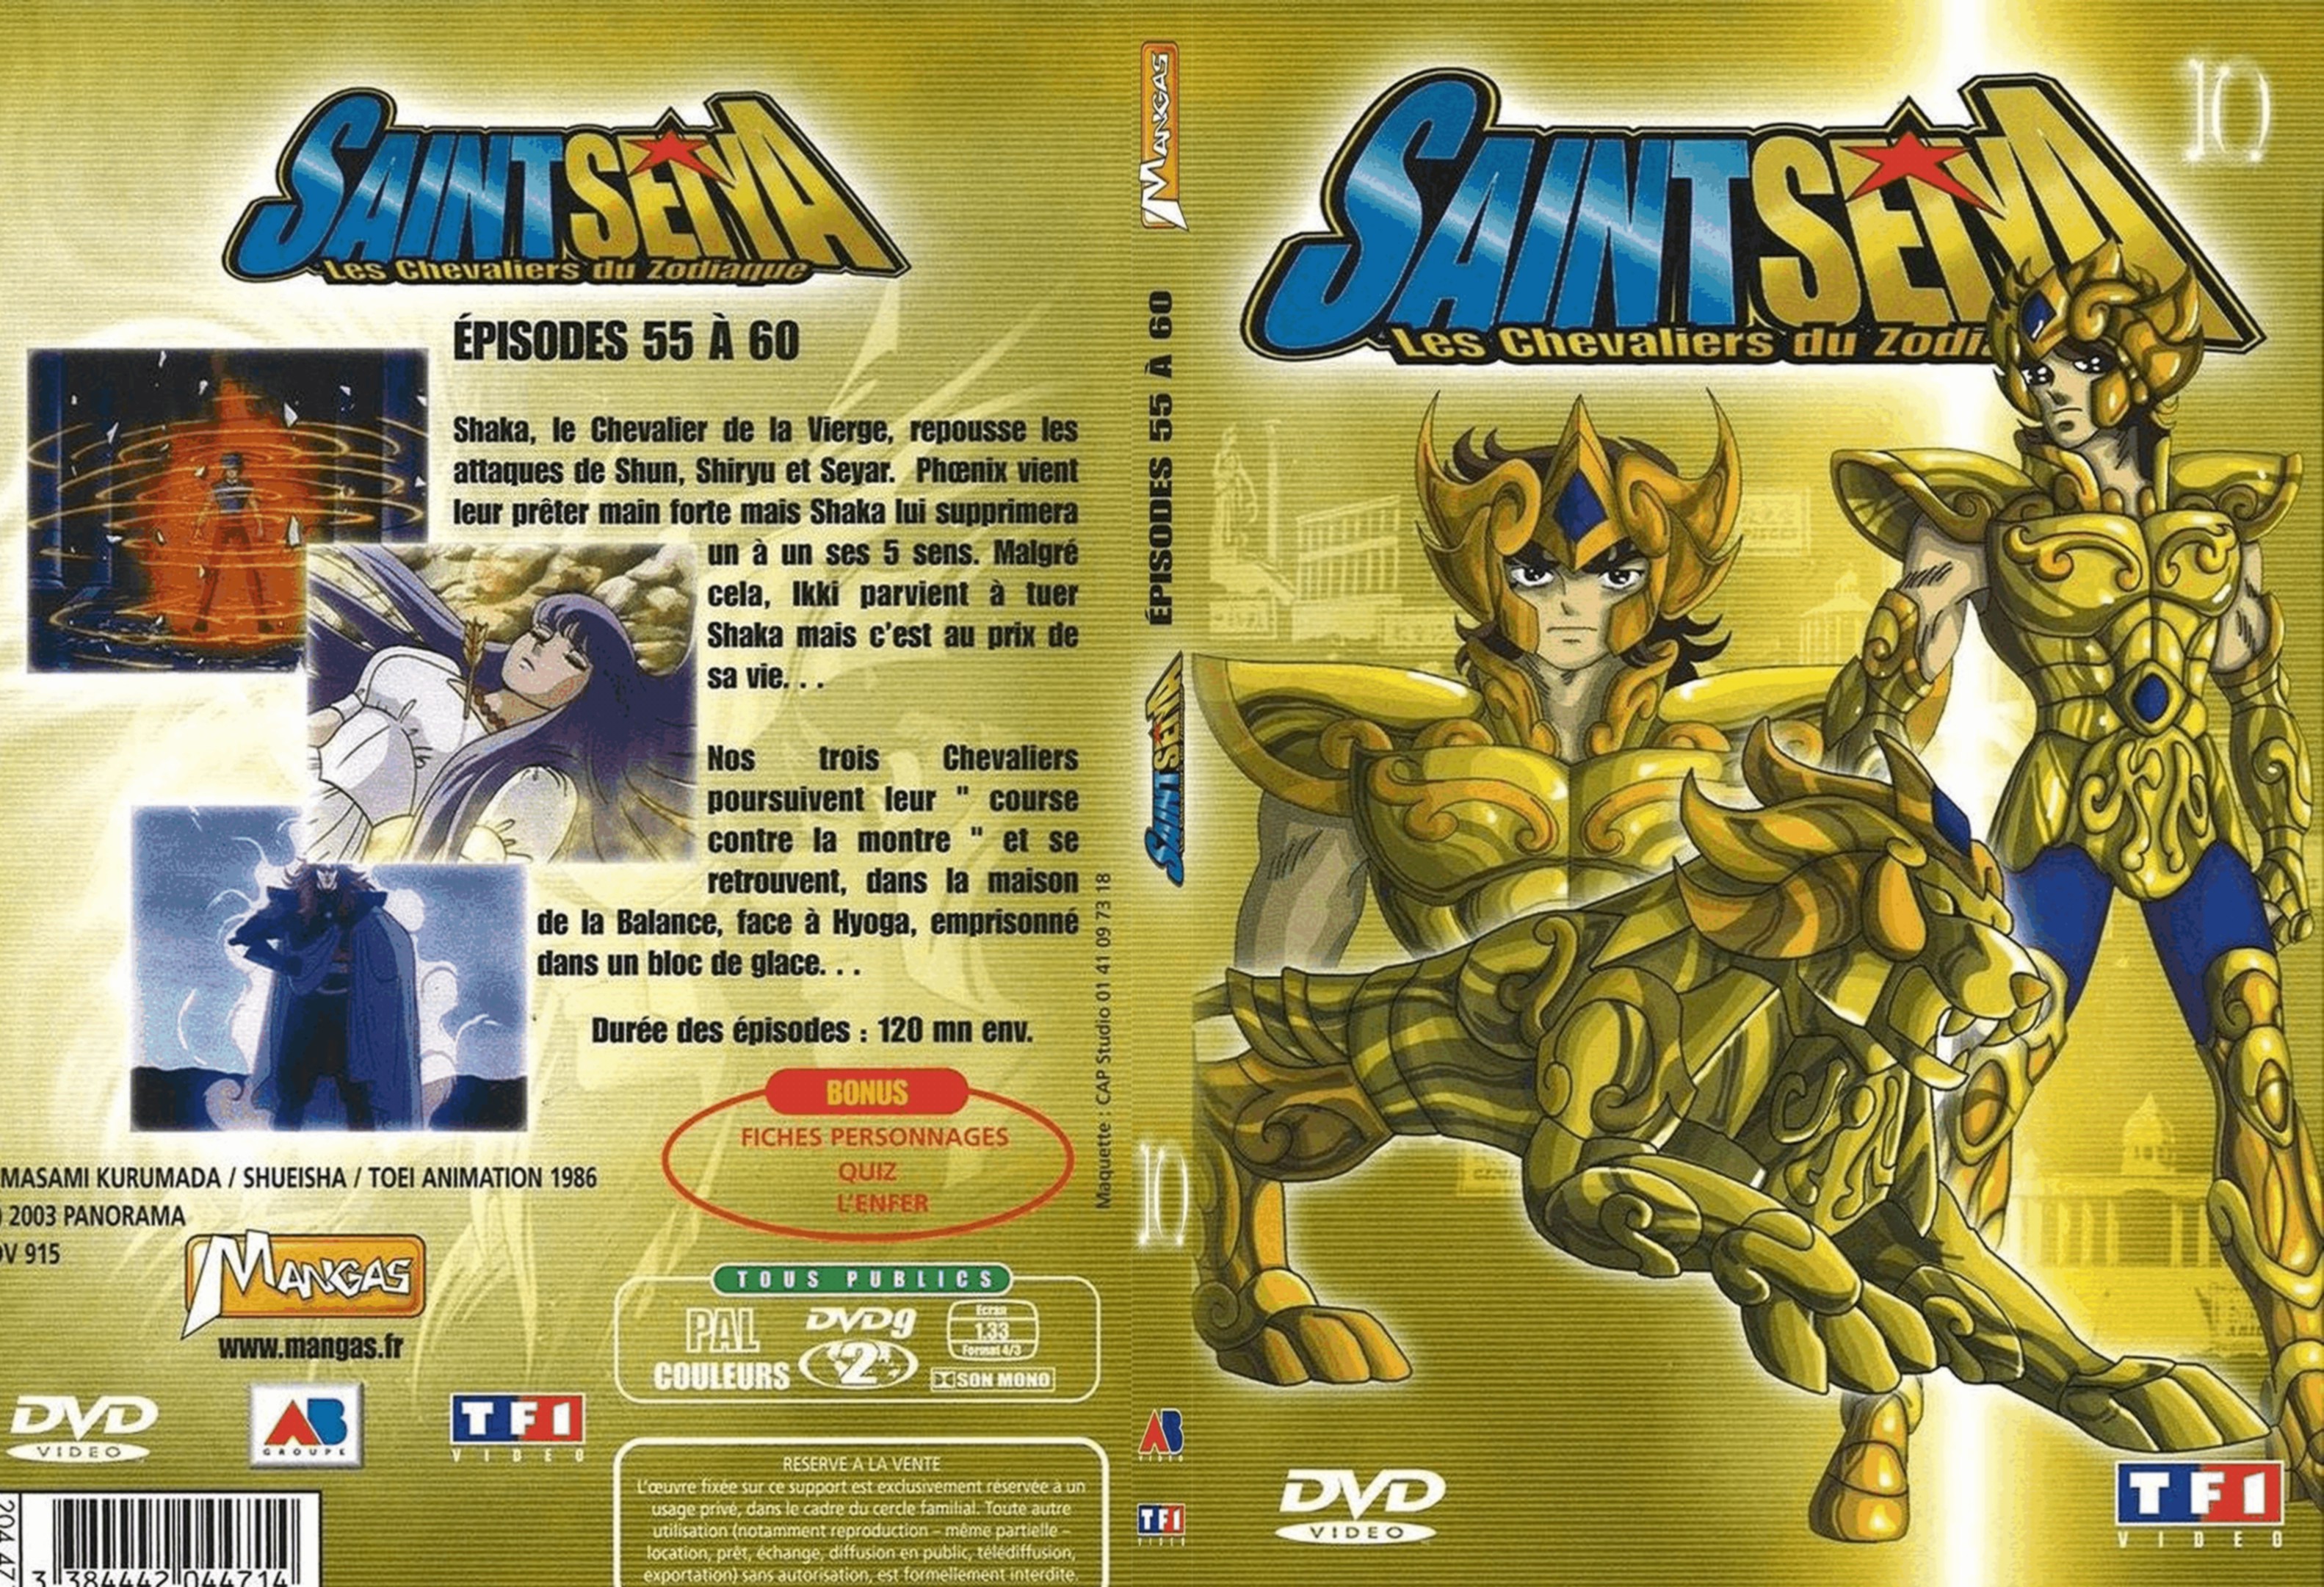 Jaquette DVD Saint Seiya vol 10 - SLIM